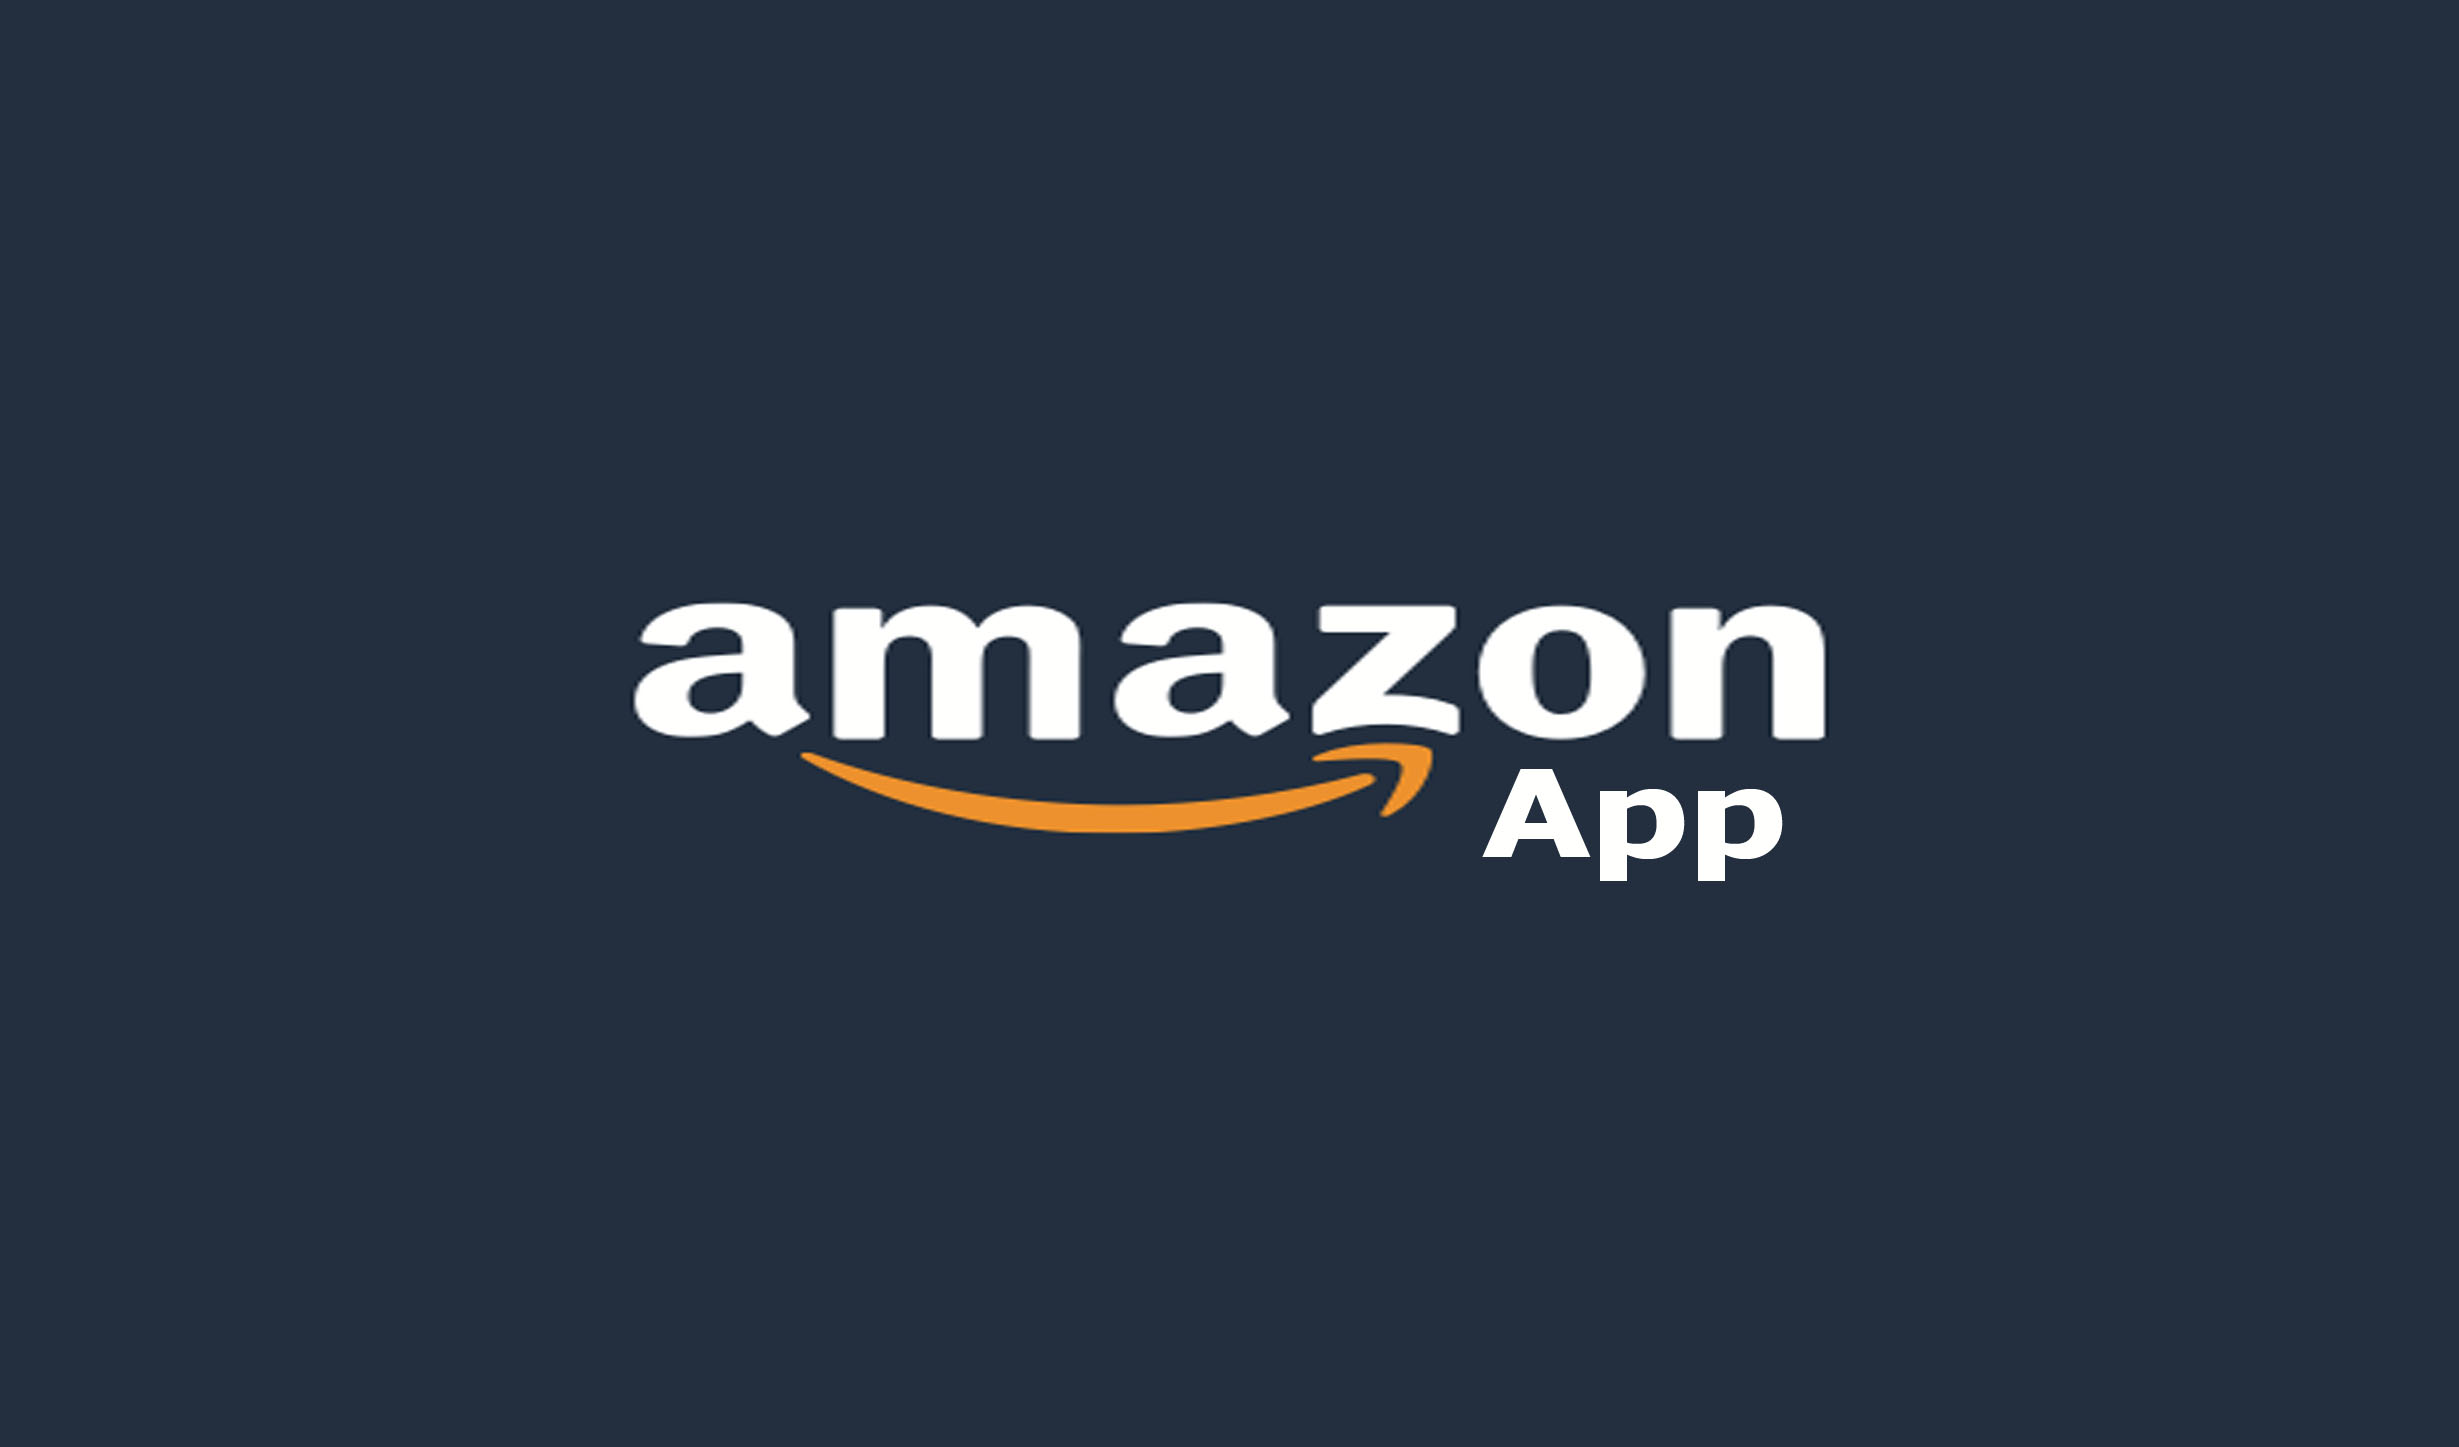 Amazon App - Amazon Application